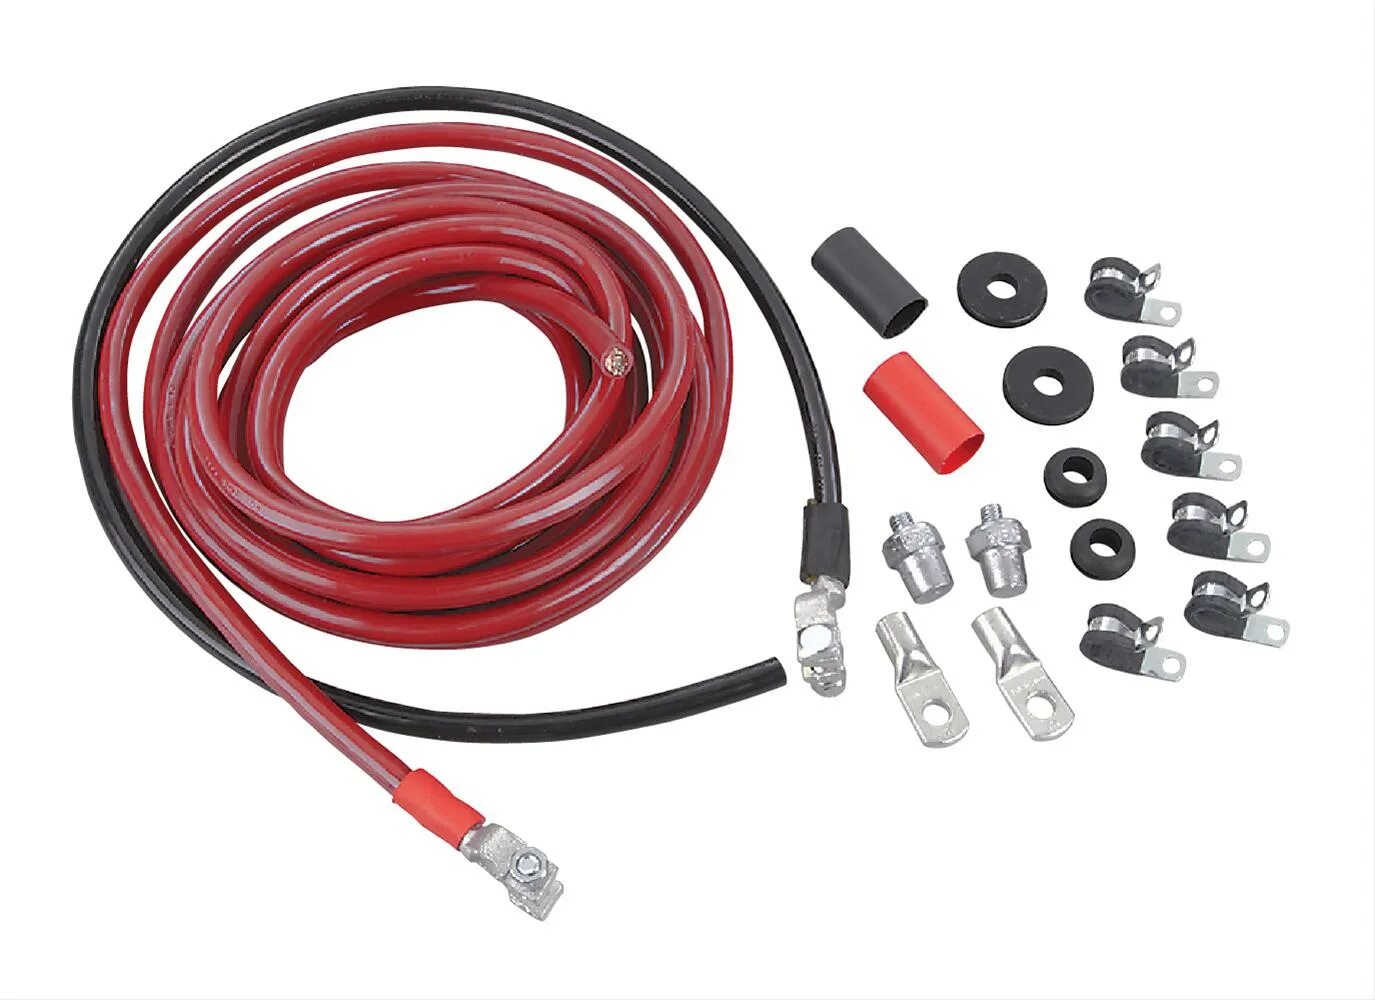 Battery kit. Cable Kit s.v.compr.1 TXV PDX. Ehzx-4.0AEC комплект DX Kit. С320 Battery Cable. CDC Batt провод.